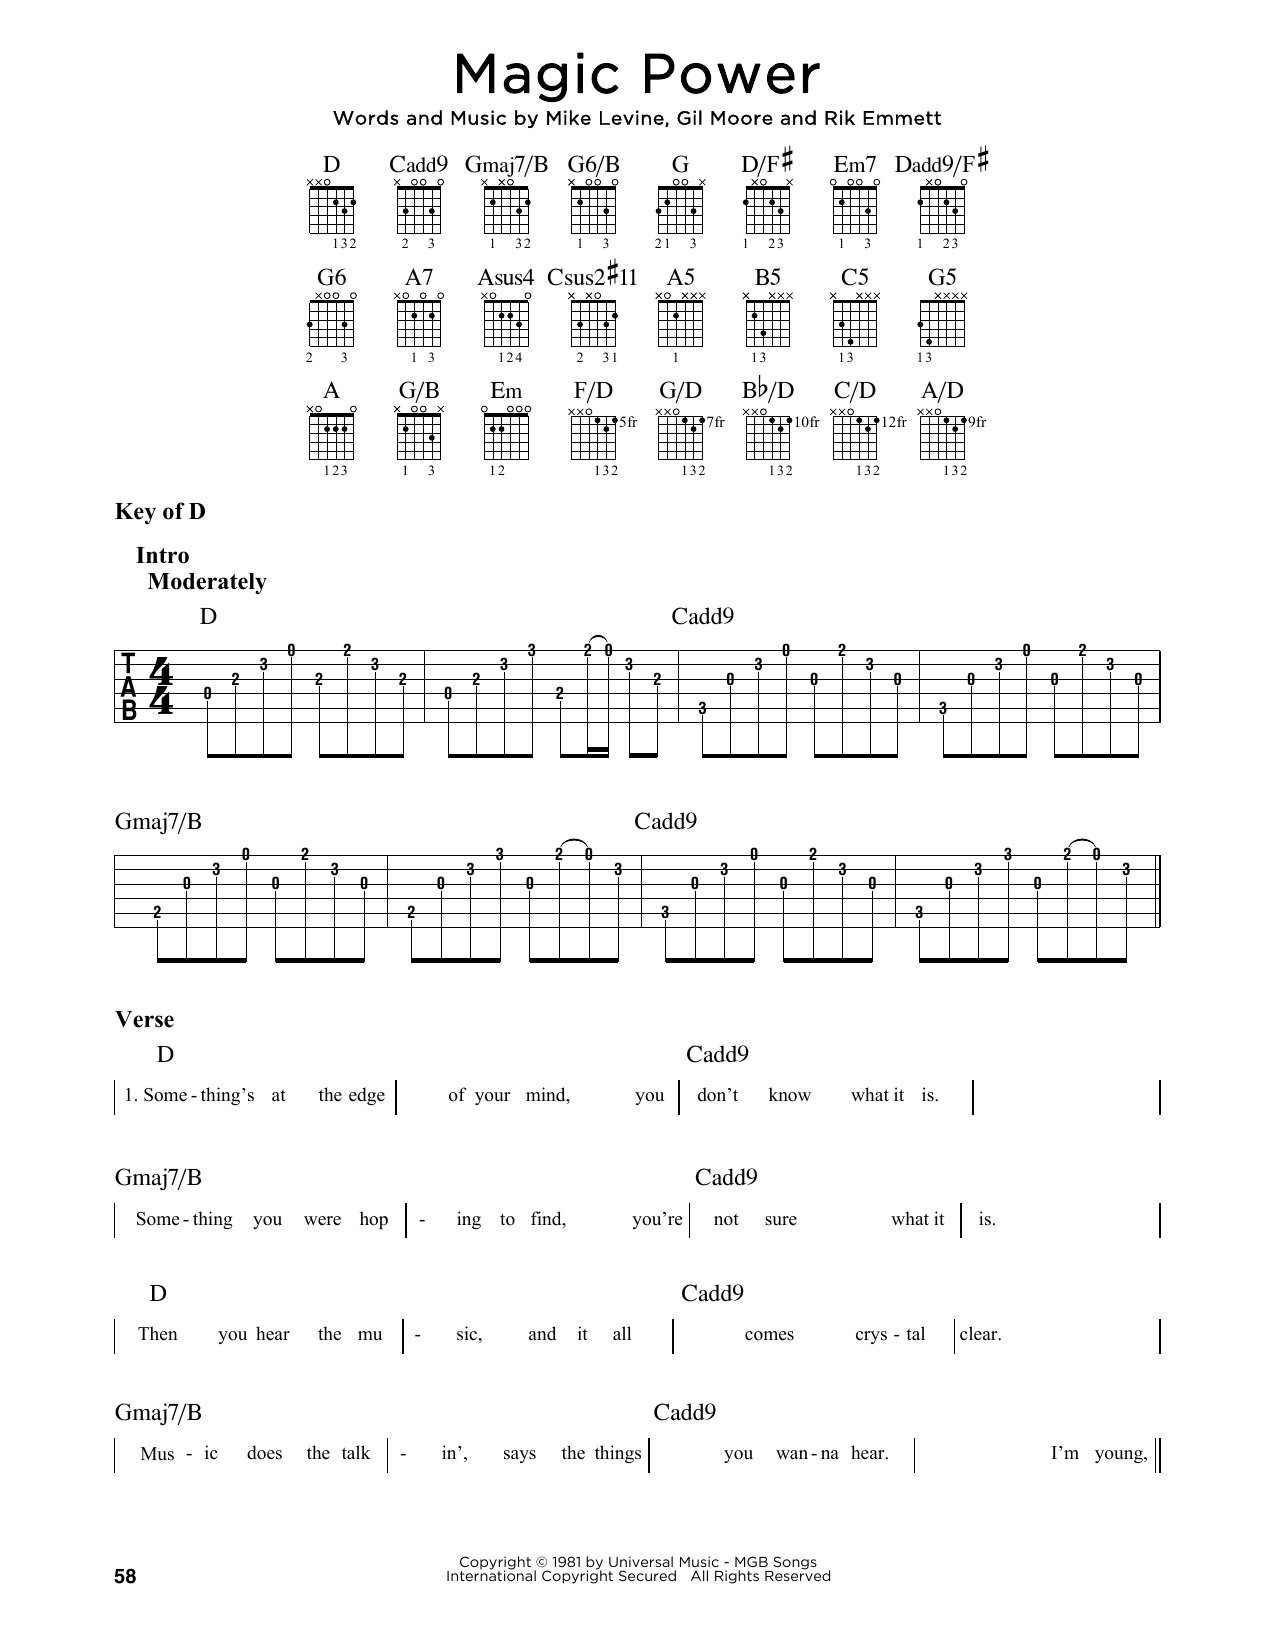 Triumph Magic Power Sheet Music Notes & Chords for Guitar Lead Sheet - Download or Print PDF